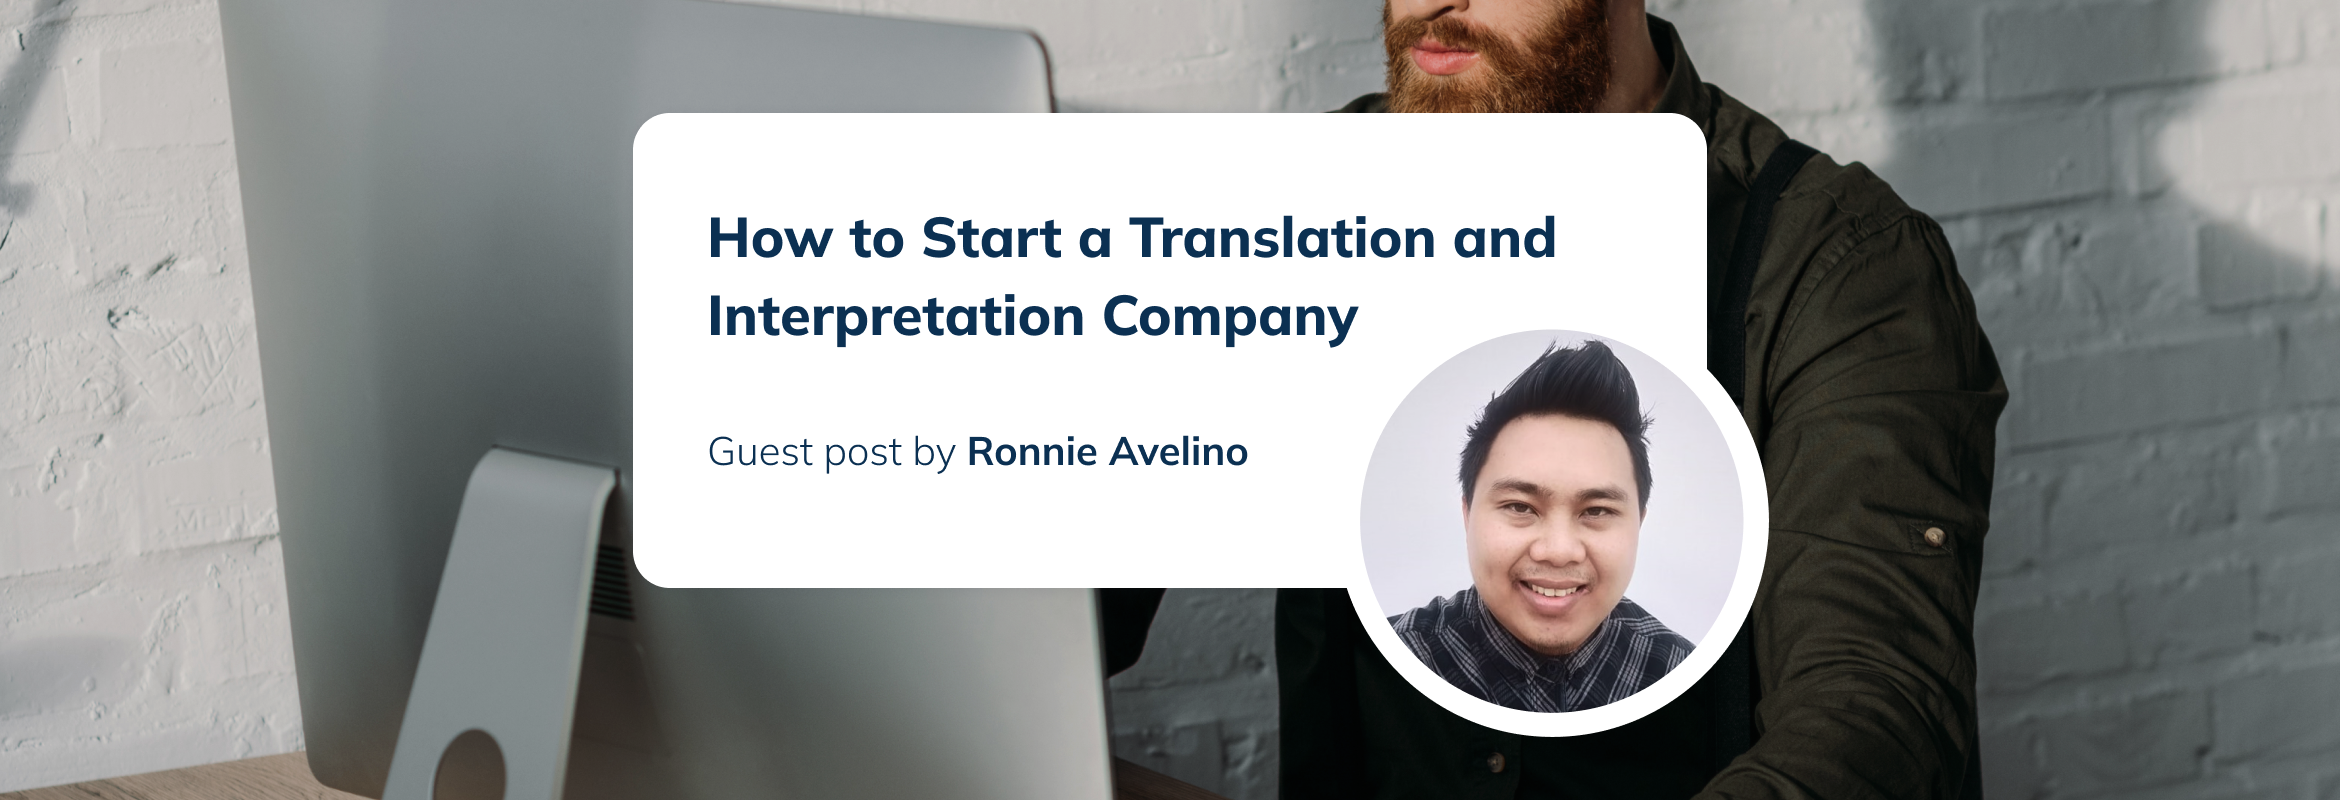 How to Start a Translation and Interpretation Company